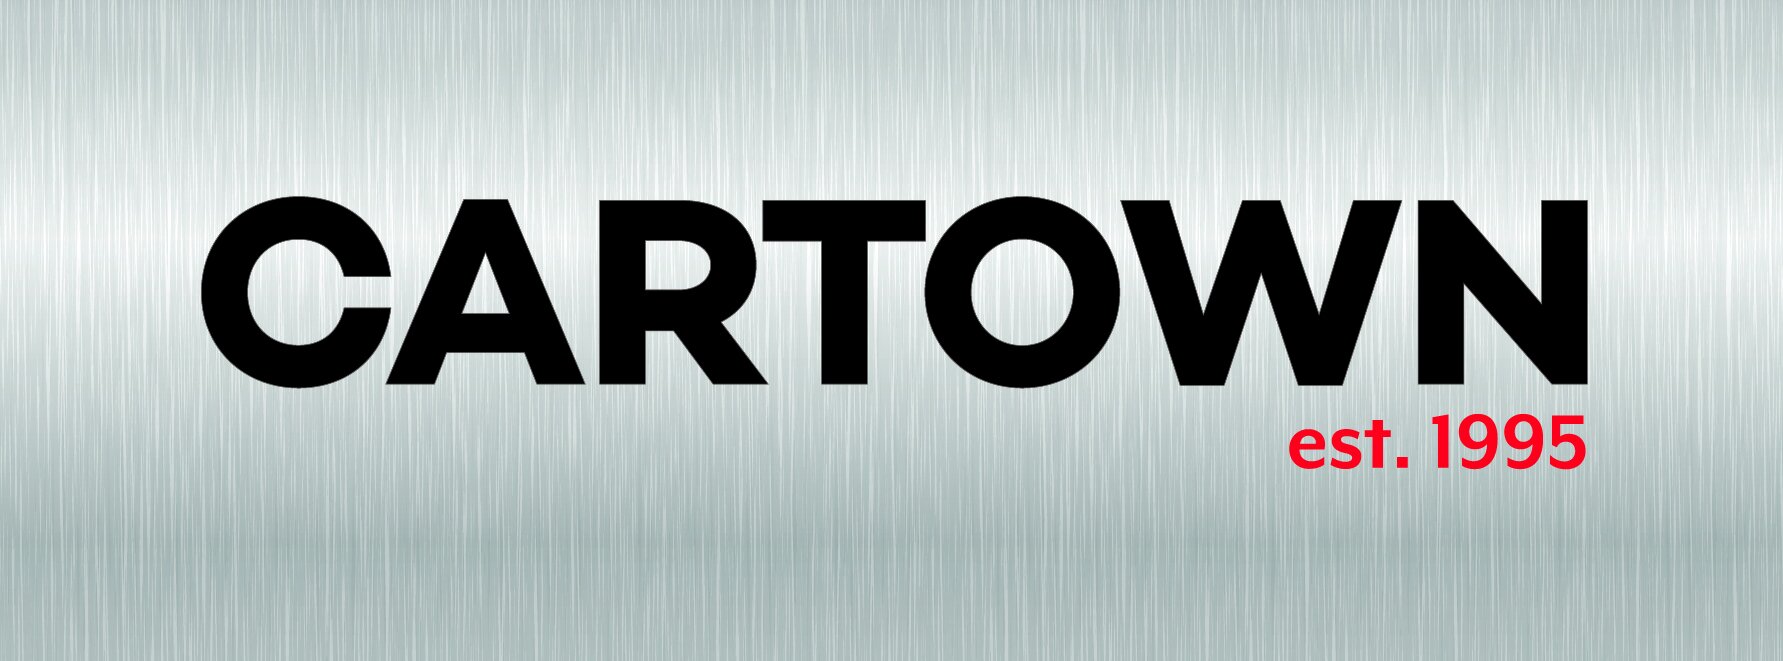 Cartown_Logo (1).png